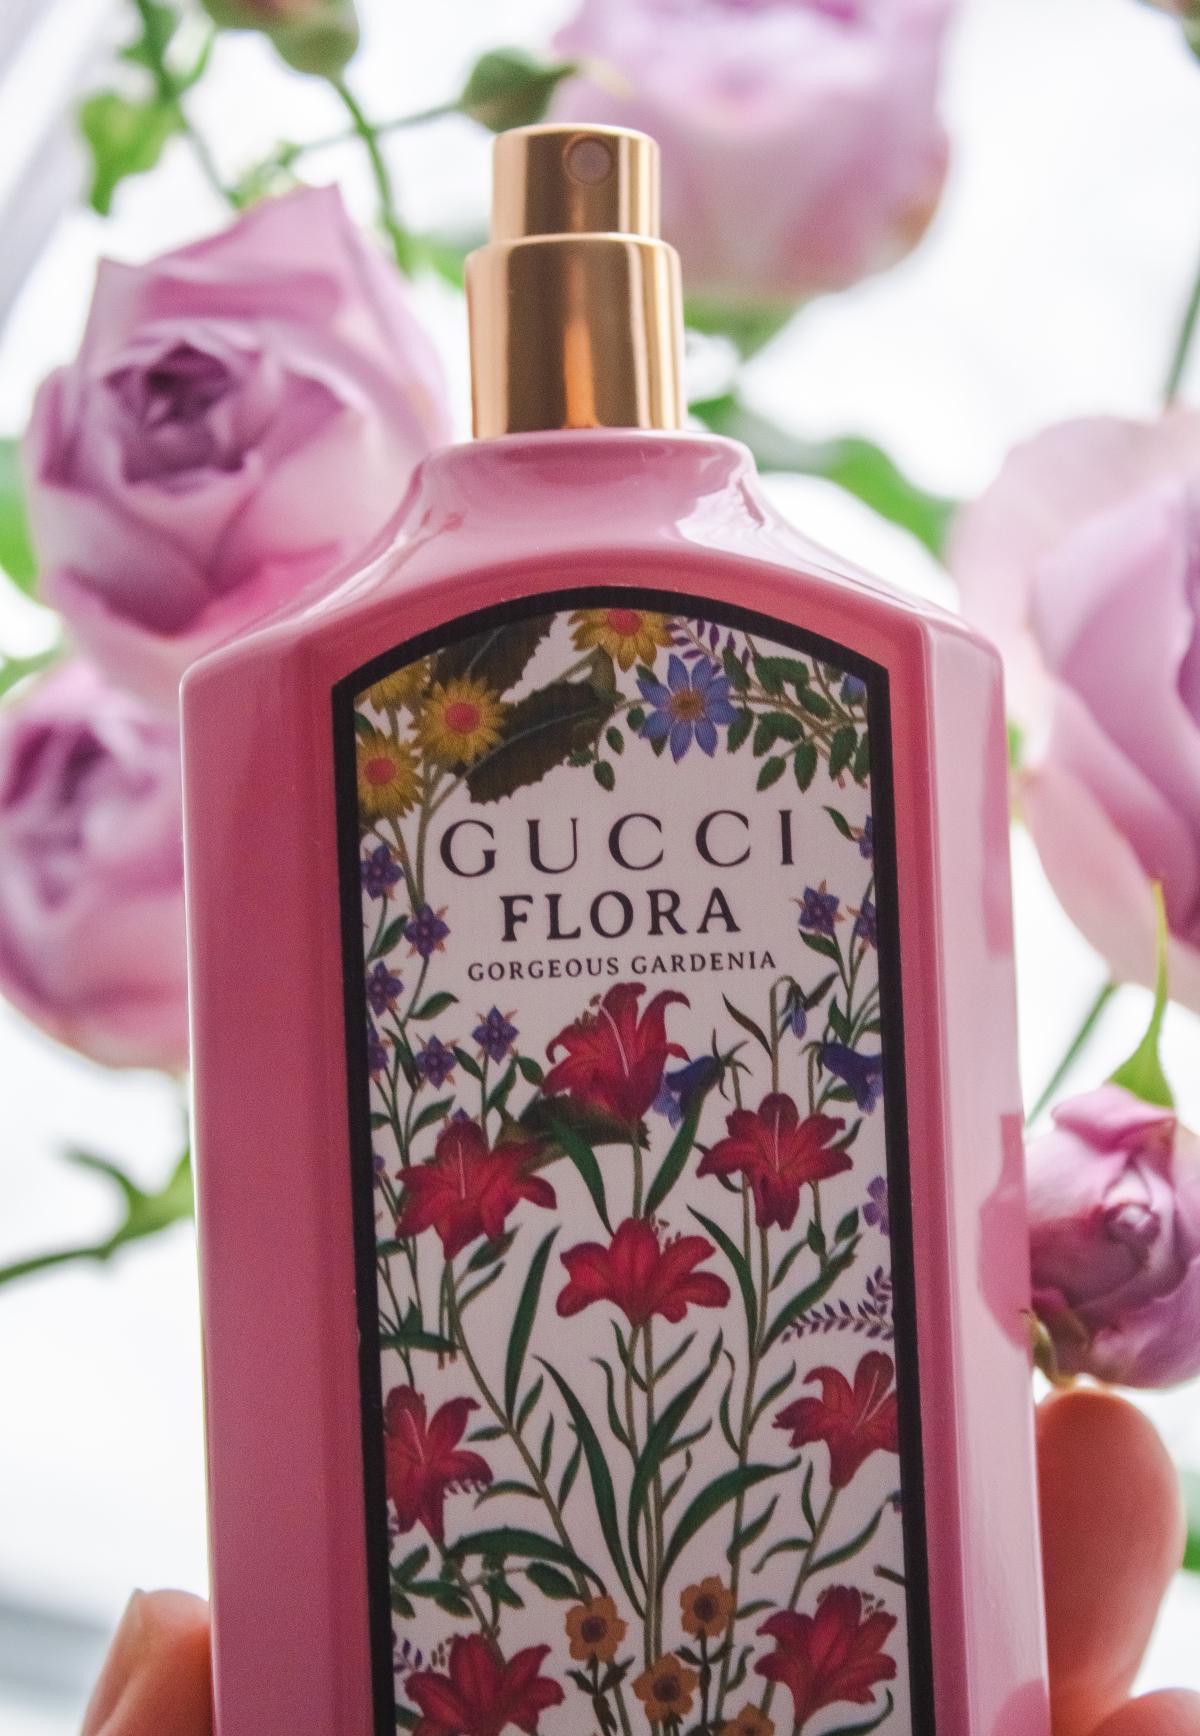 Flora Gorgeous Gardenia Eau de Parfum Gucci perfume - a fragrance for ...